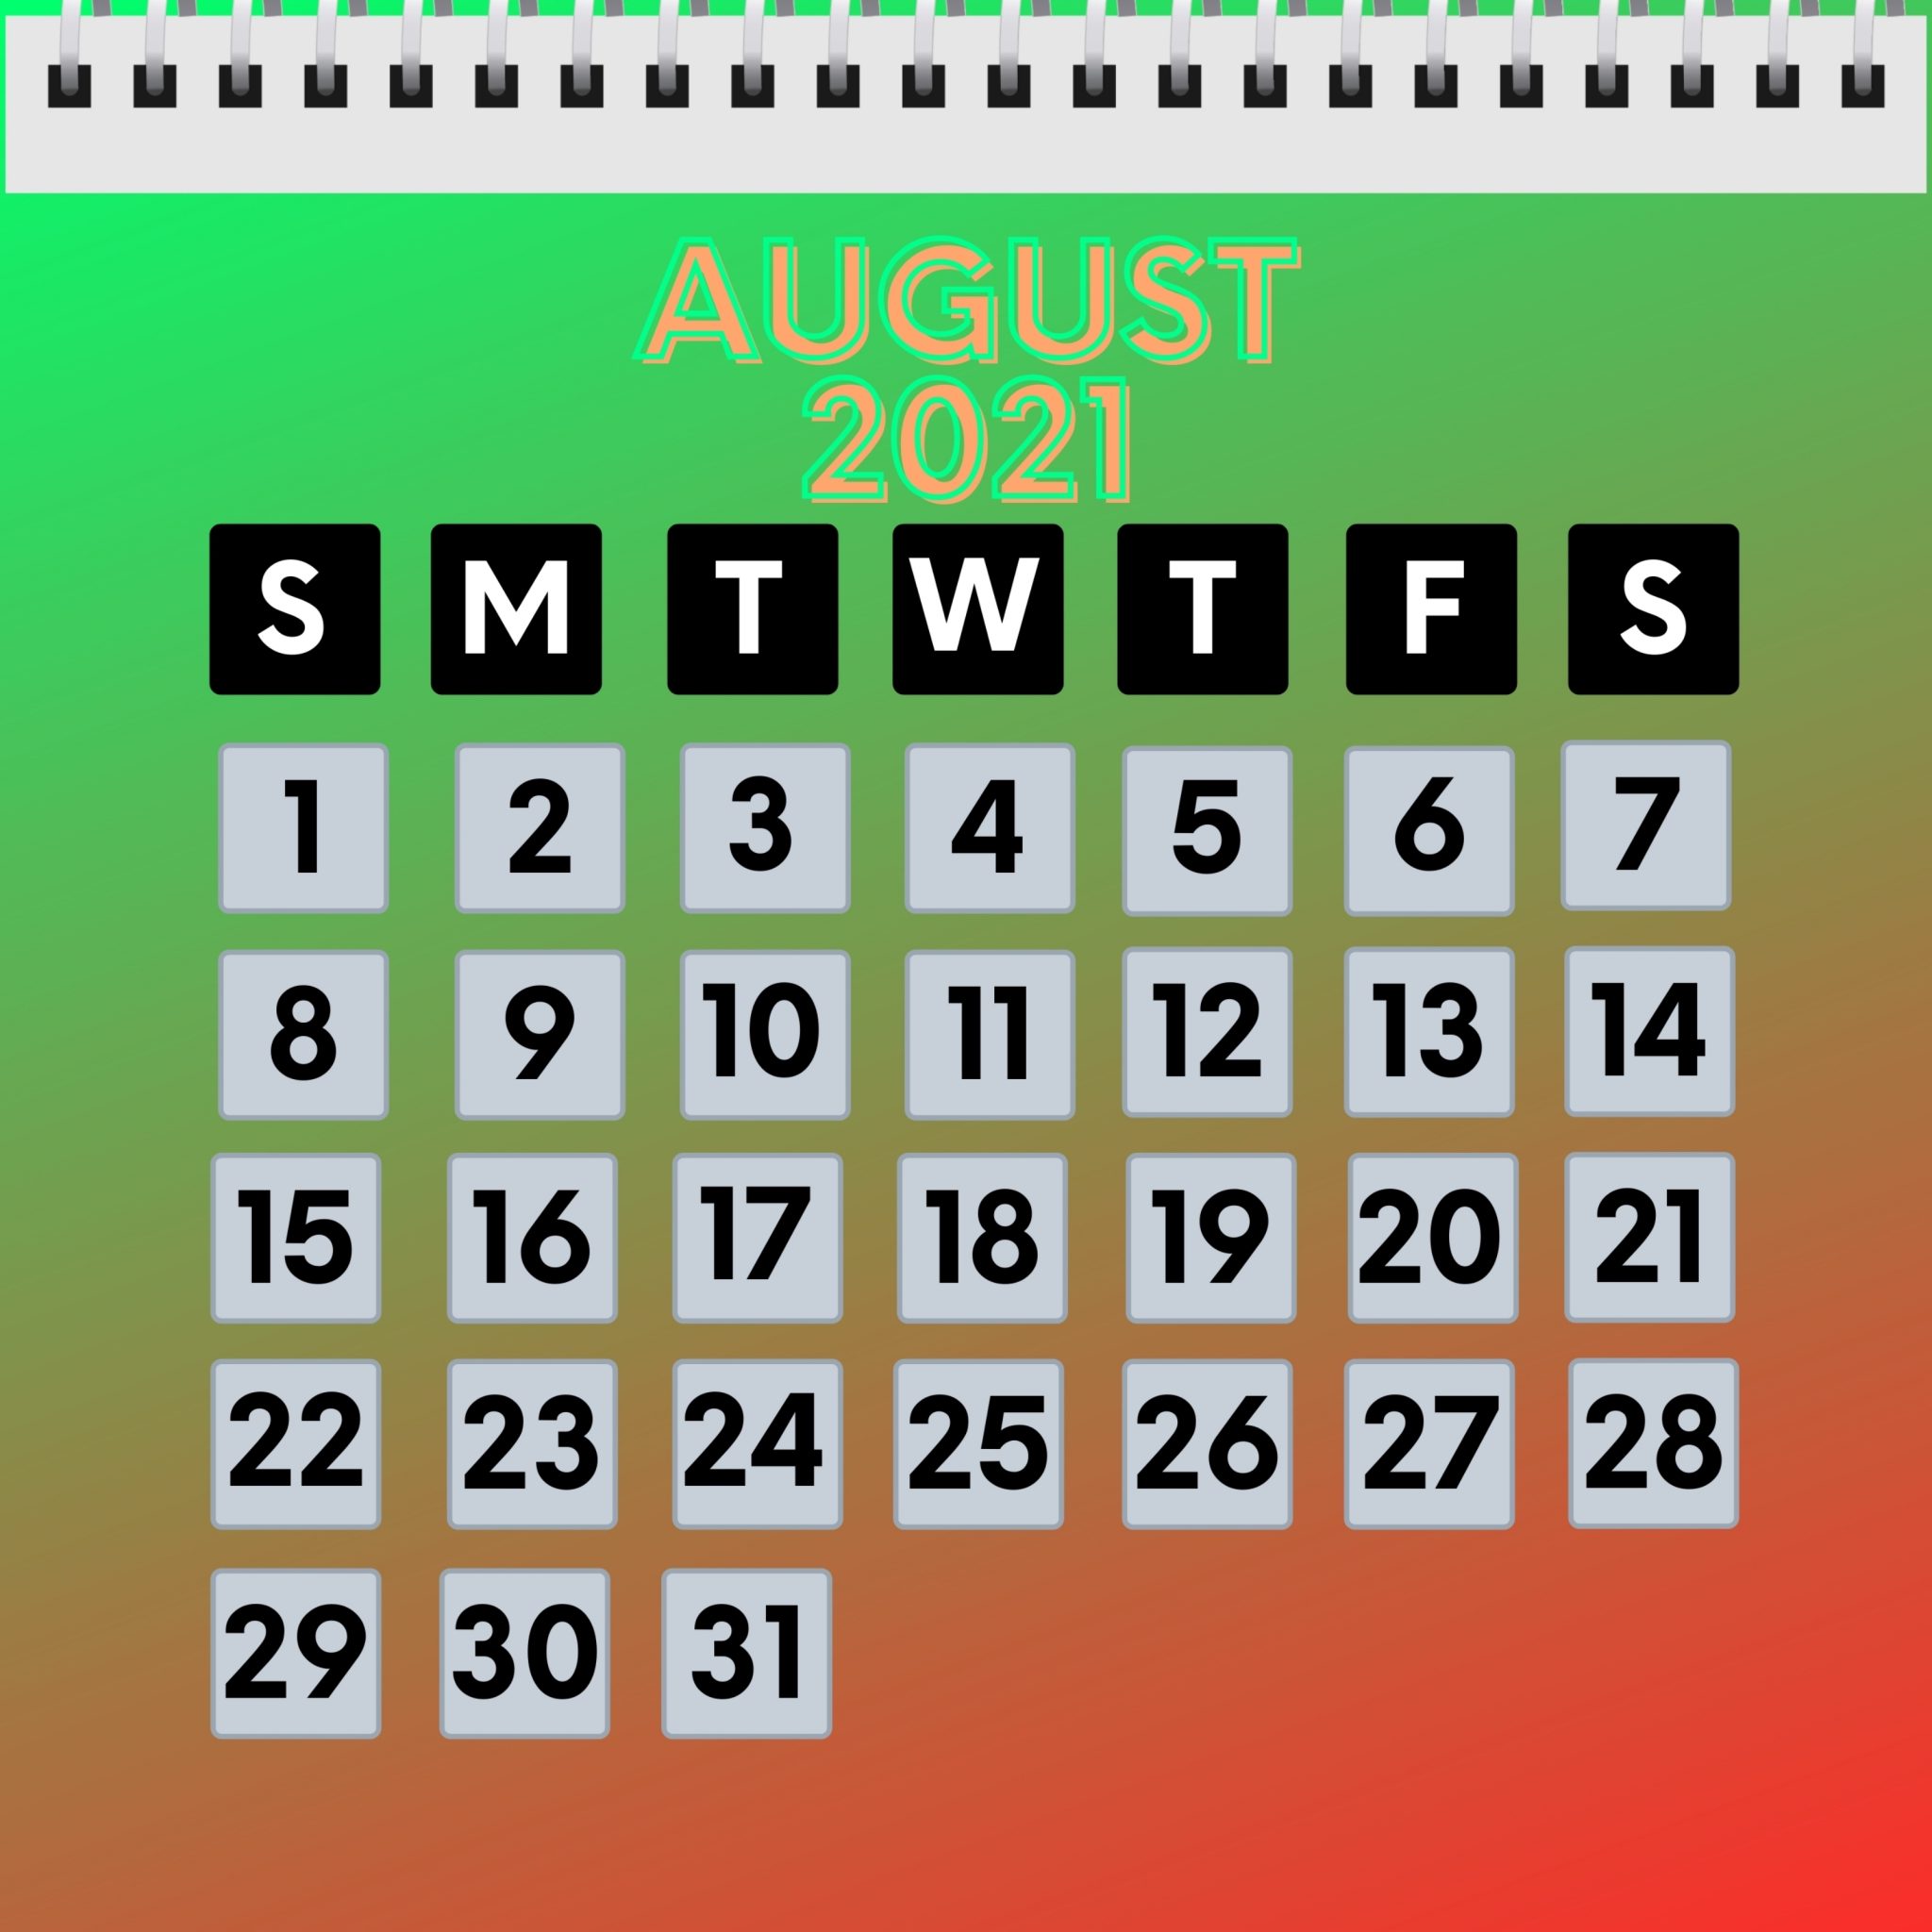 2048x2048 wallpapers iPad retina August 2021 Calendar iPad Wallpaper 2048x2048 pixels resolution